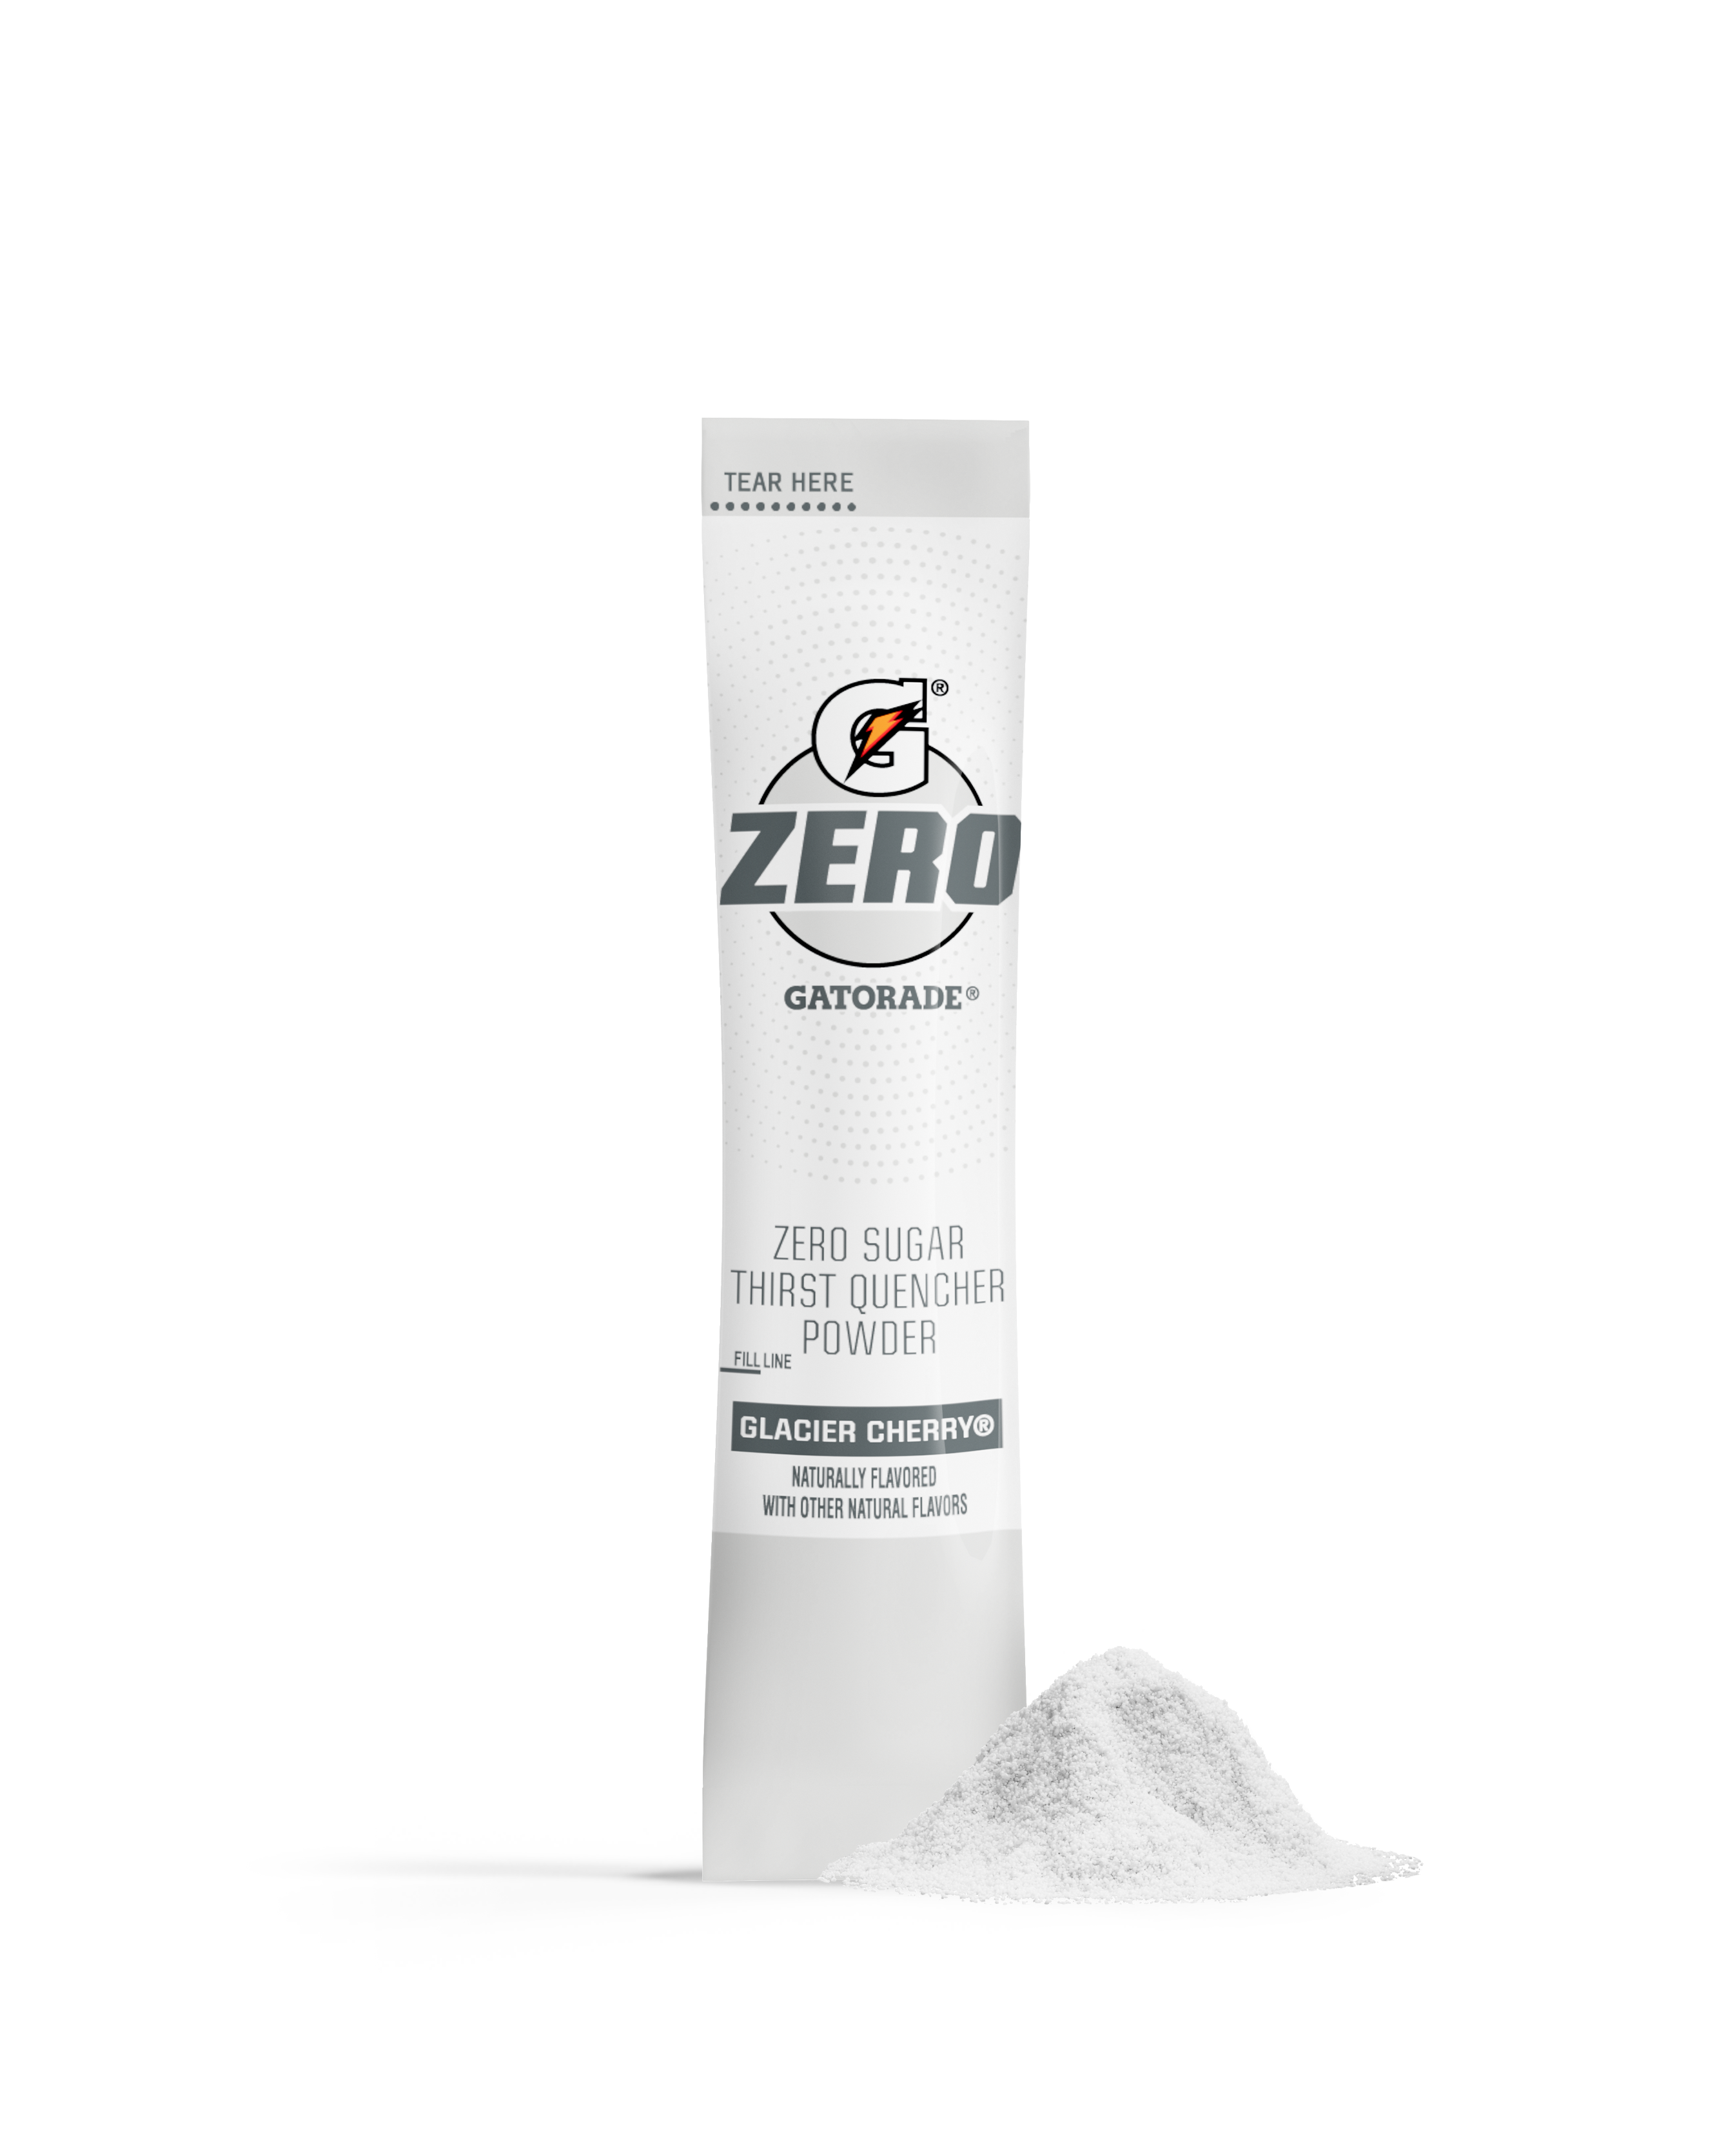 Gatorade zero glacier cherry single serve powder